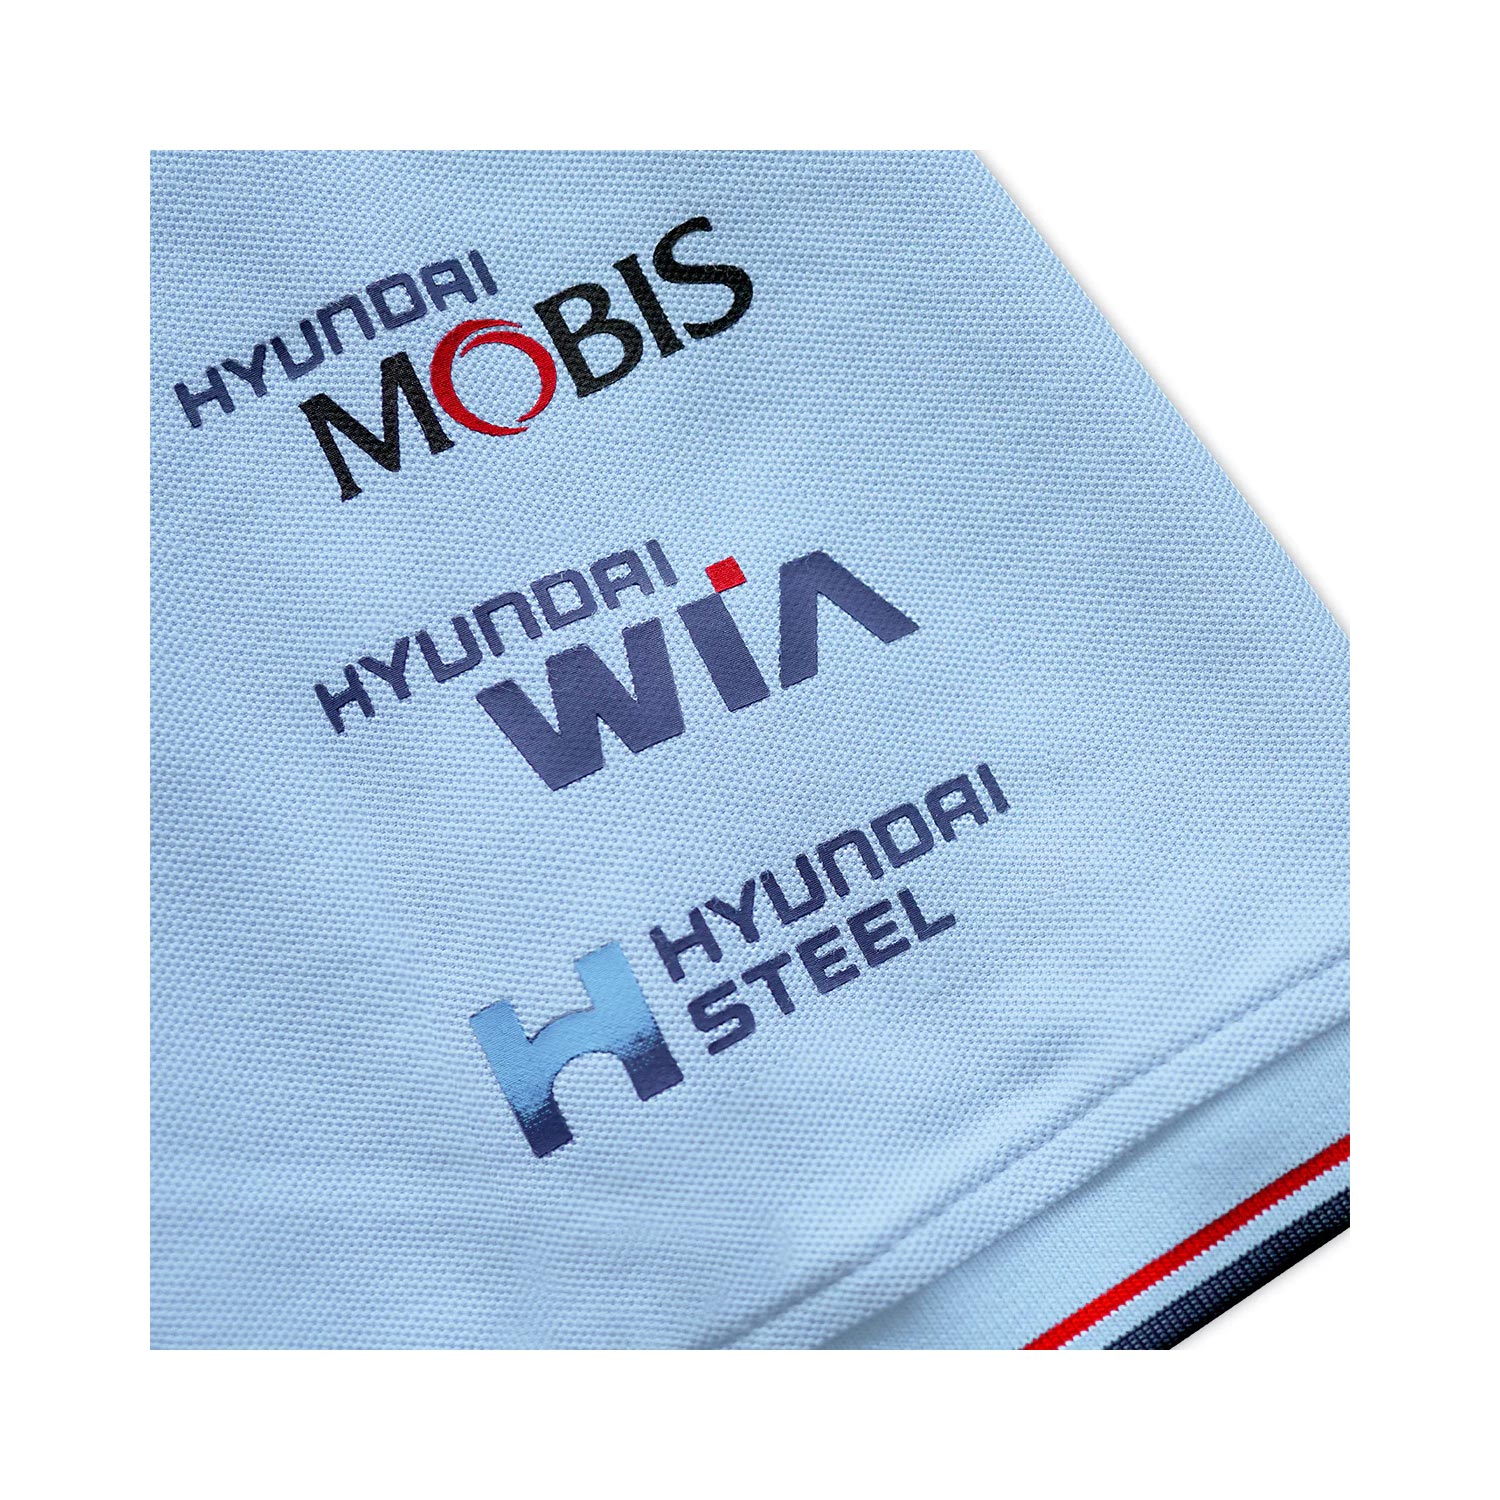 2023 Hyundai Motorsport Mens Team Polo Shirt | Polo Shirts \ Men's ...